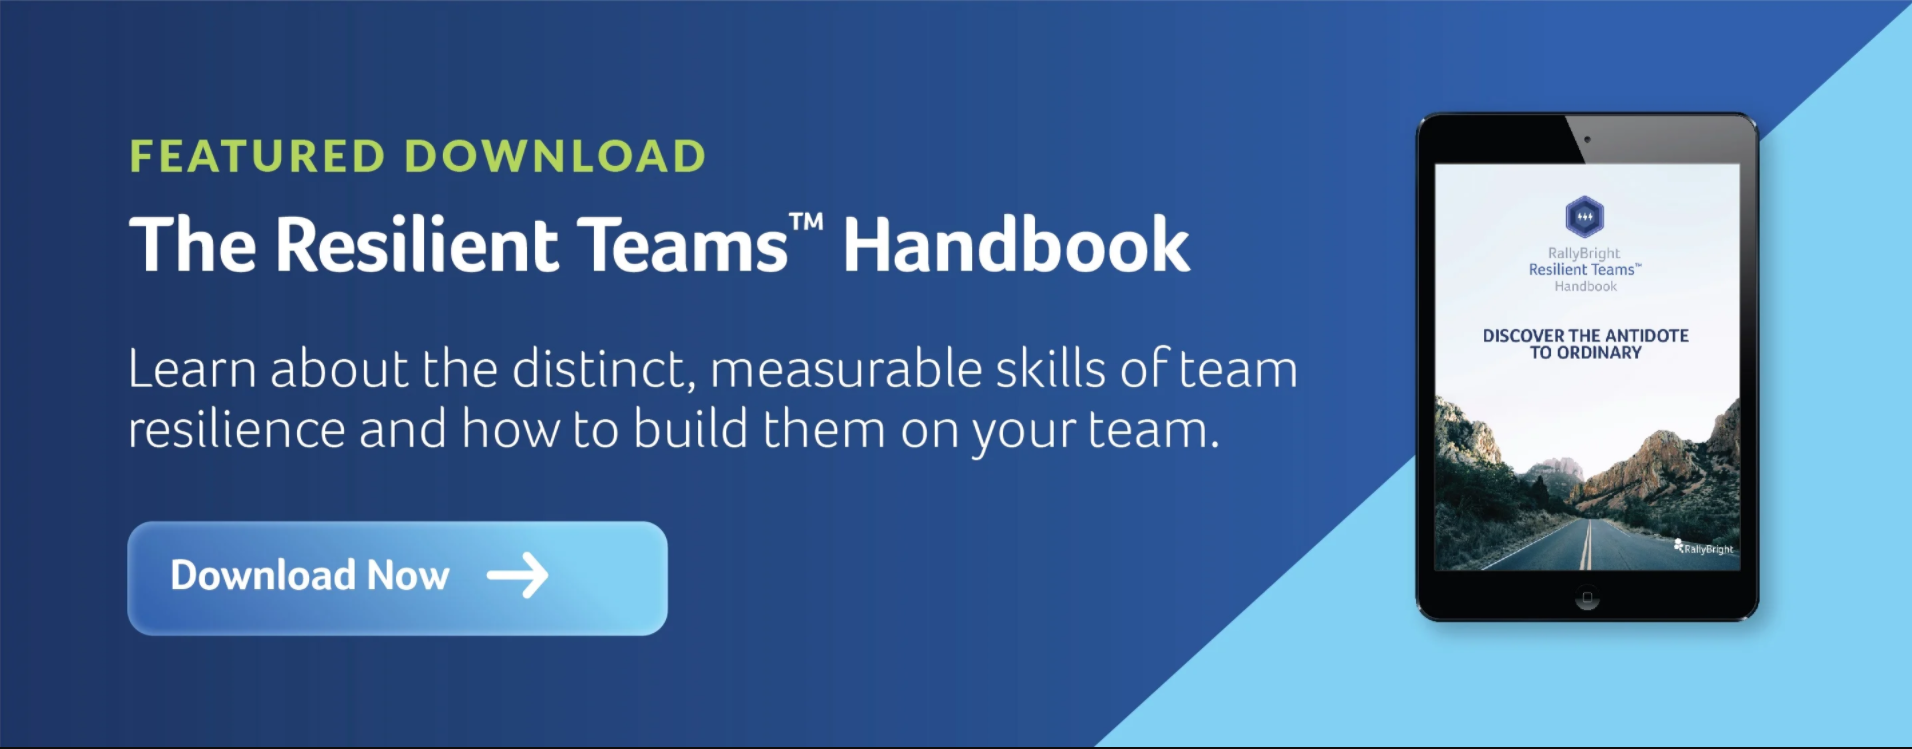 The Resilient Teams Handbook